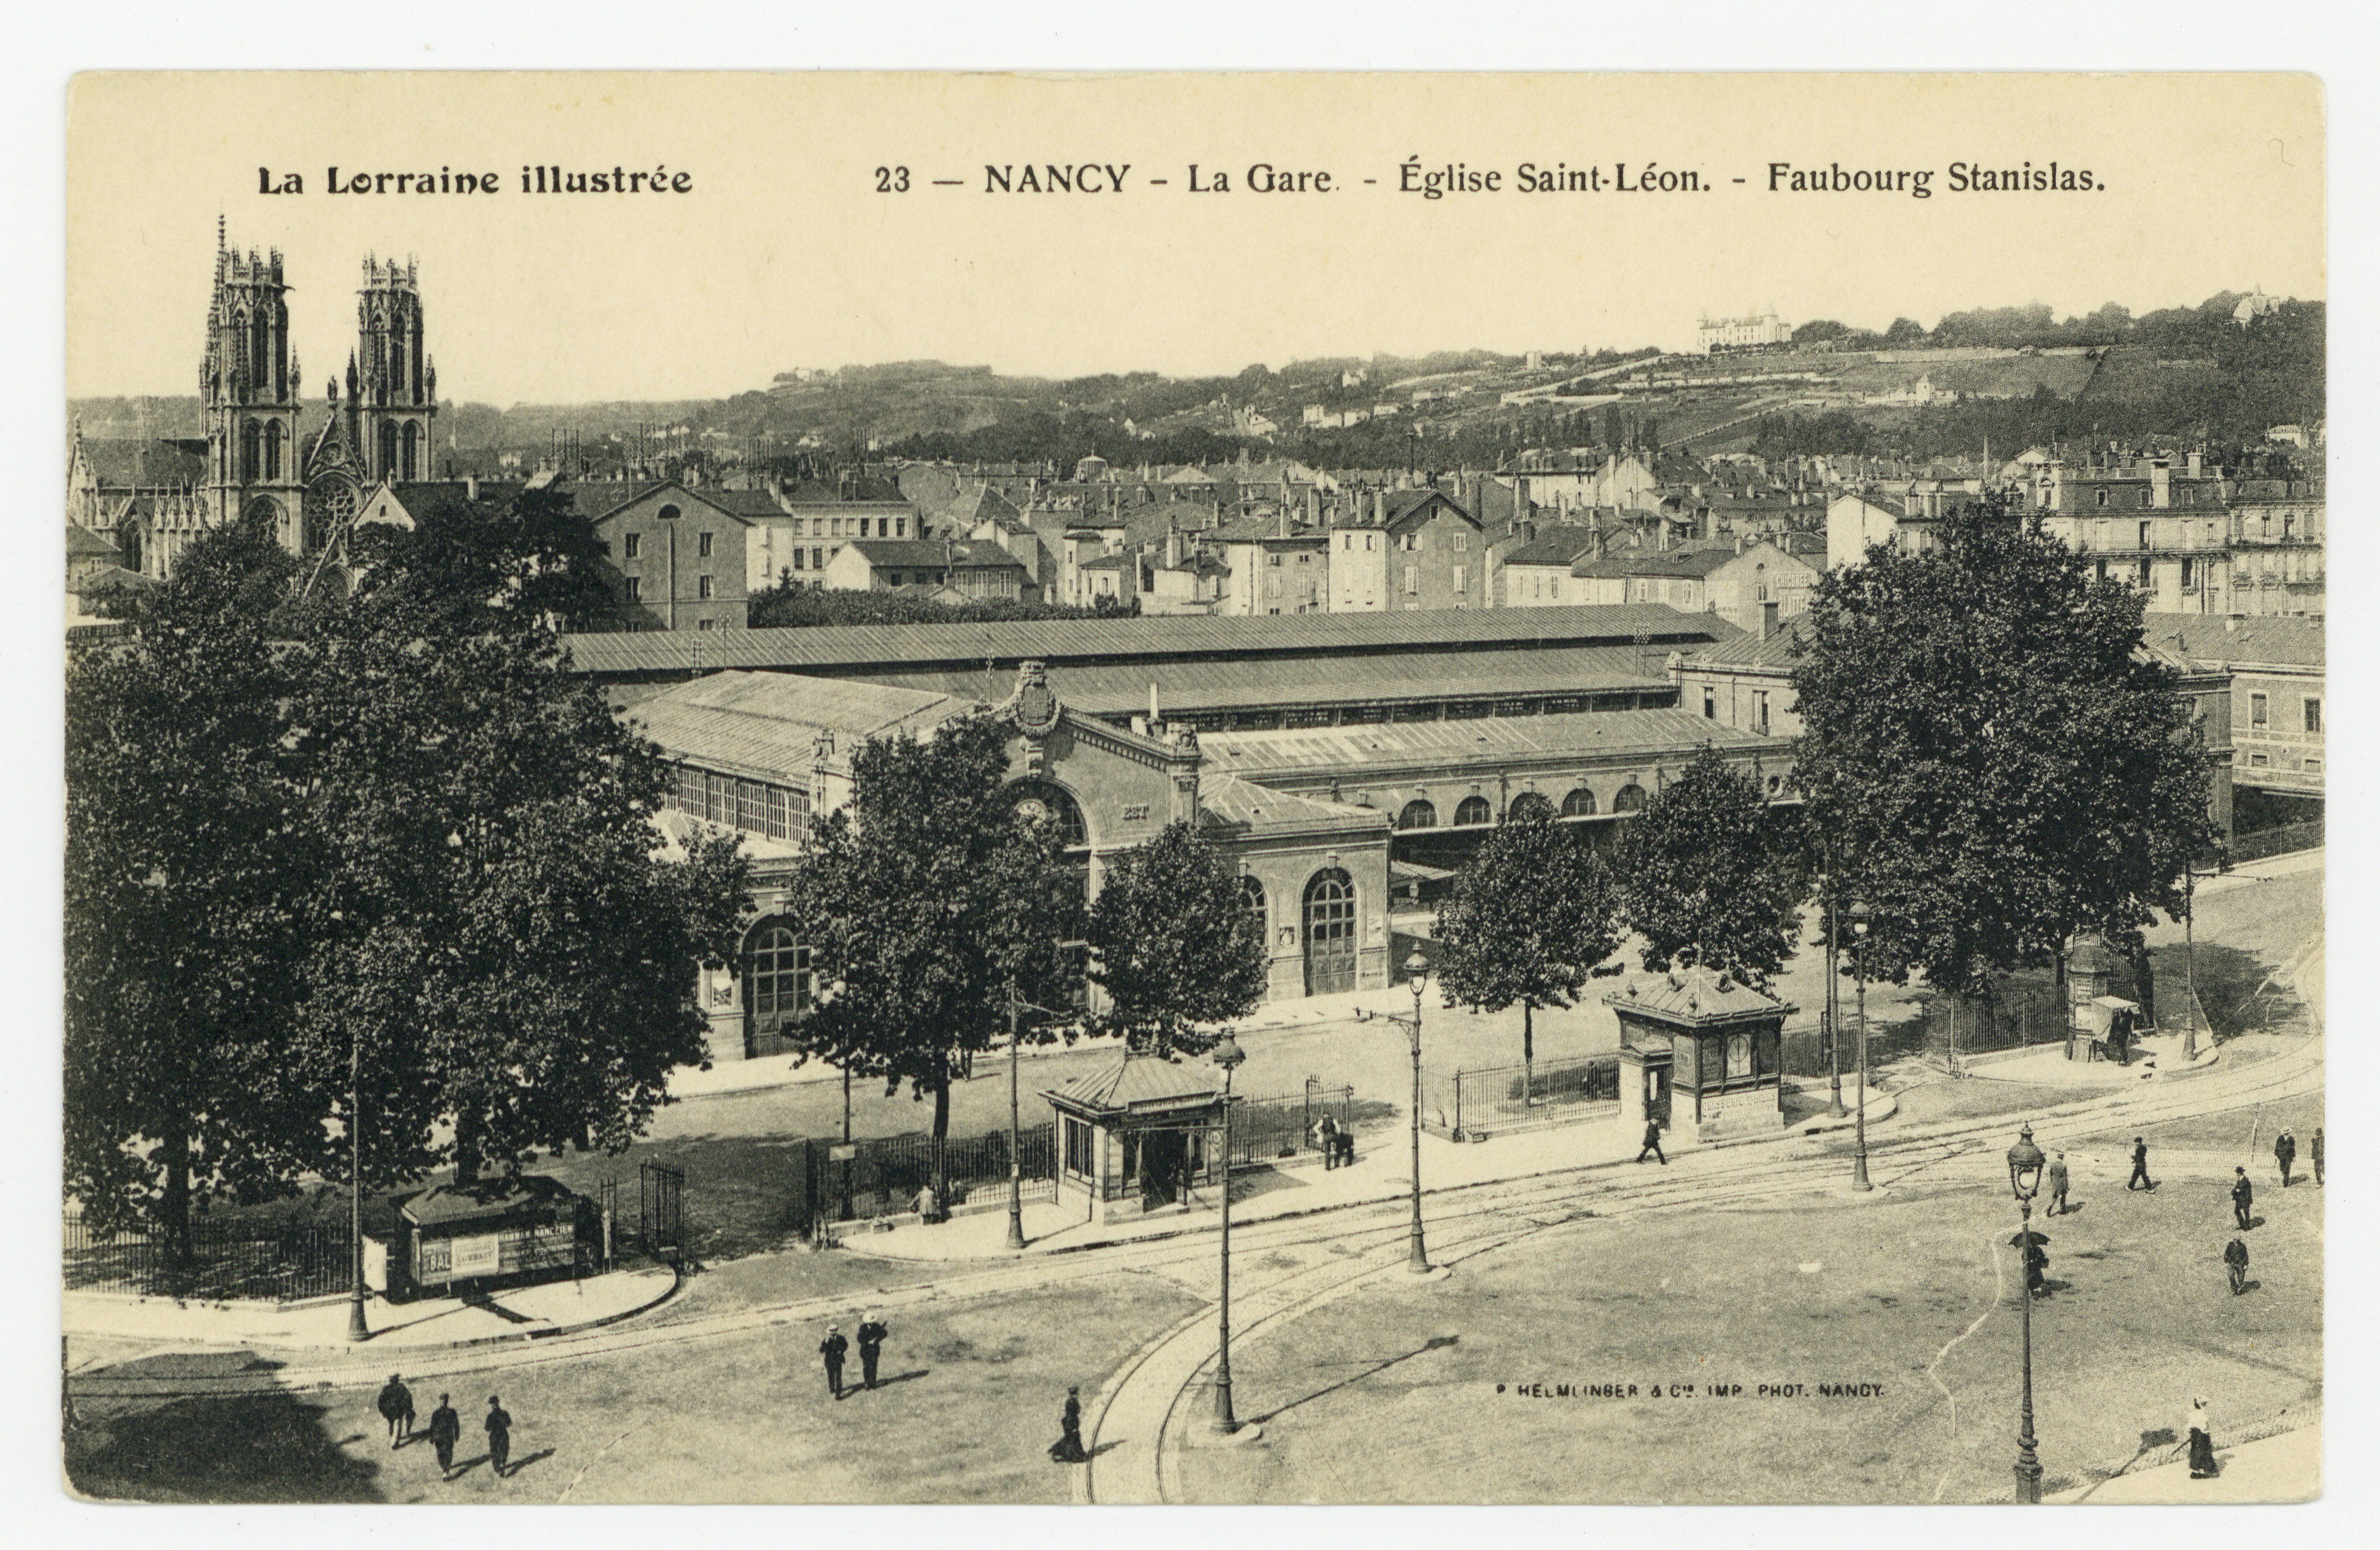 Contenu du Nancy : la gare, église Saint-Léon, faubourg Stanislas